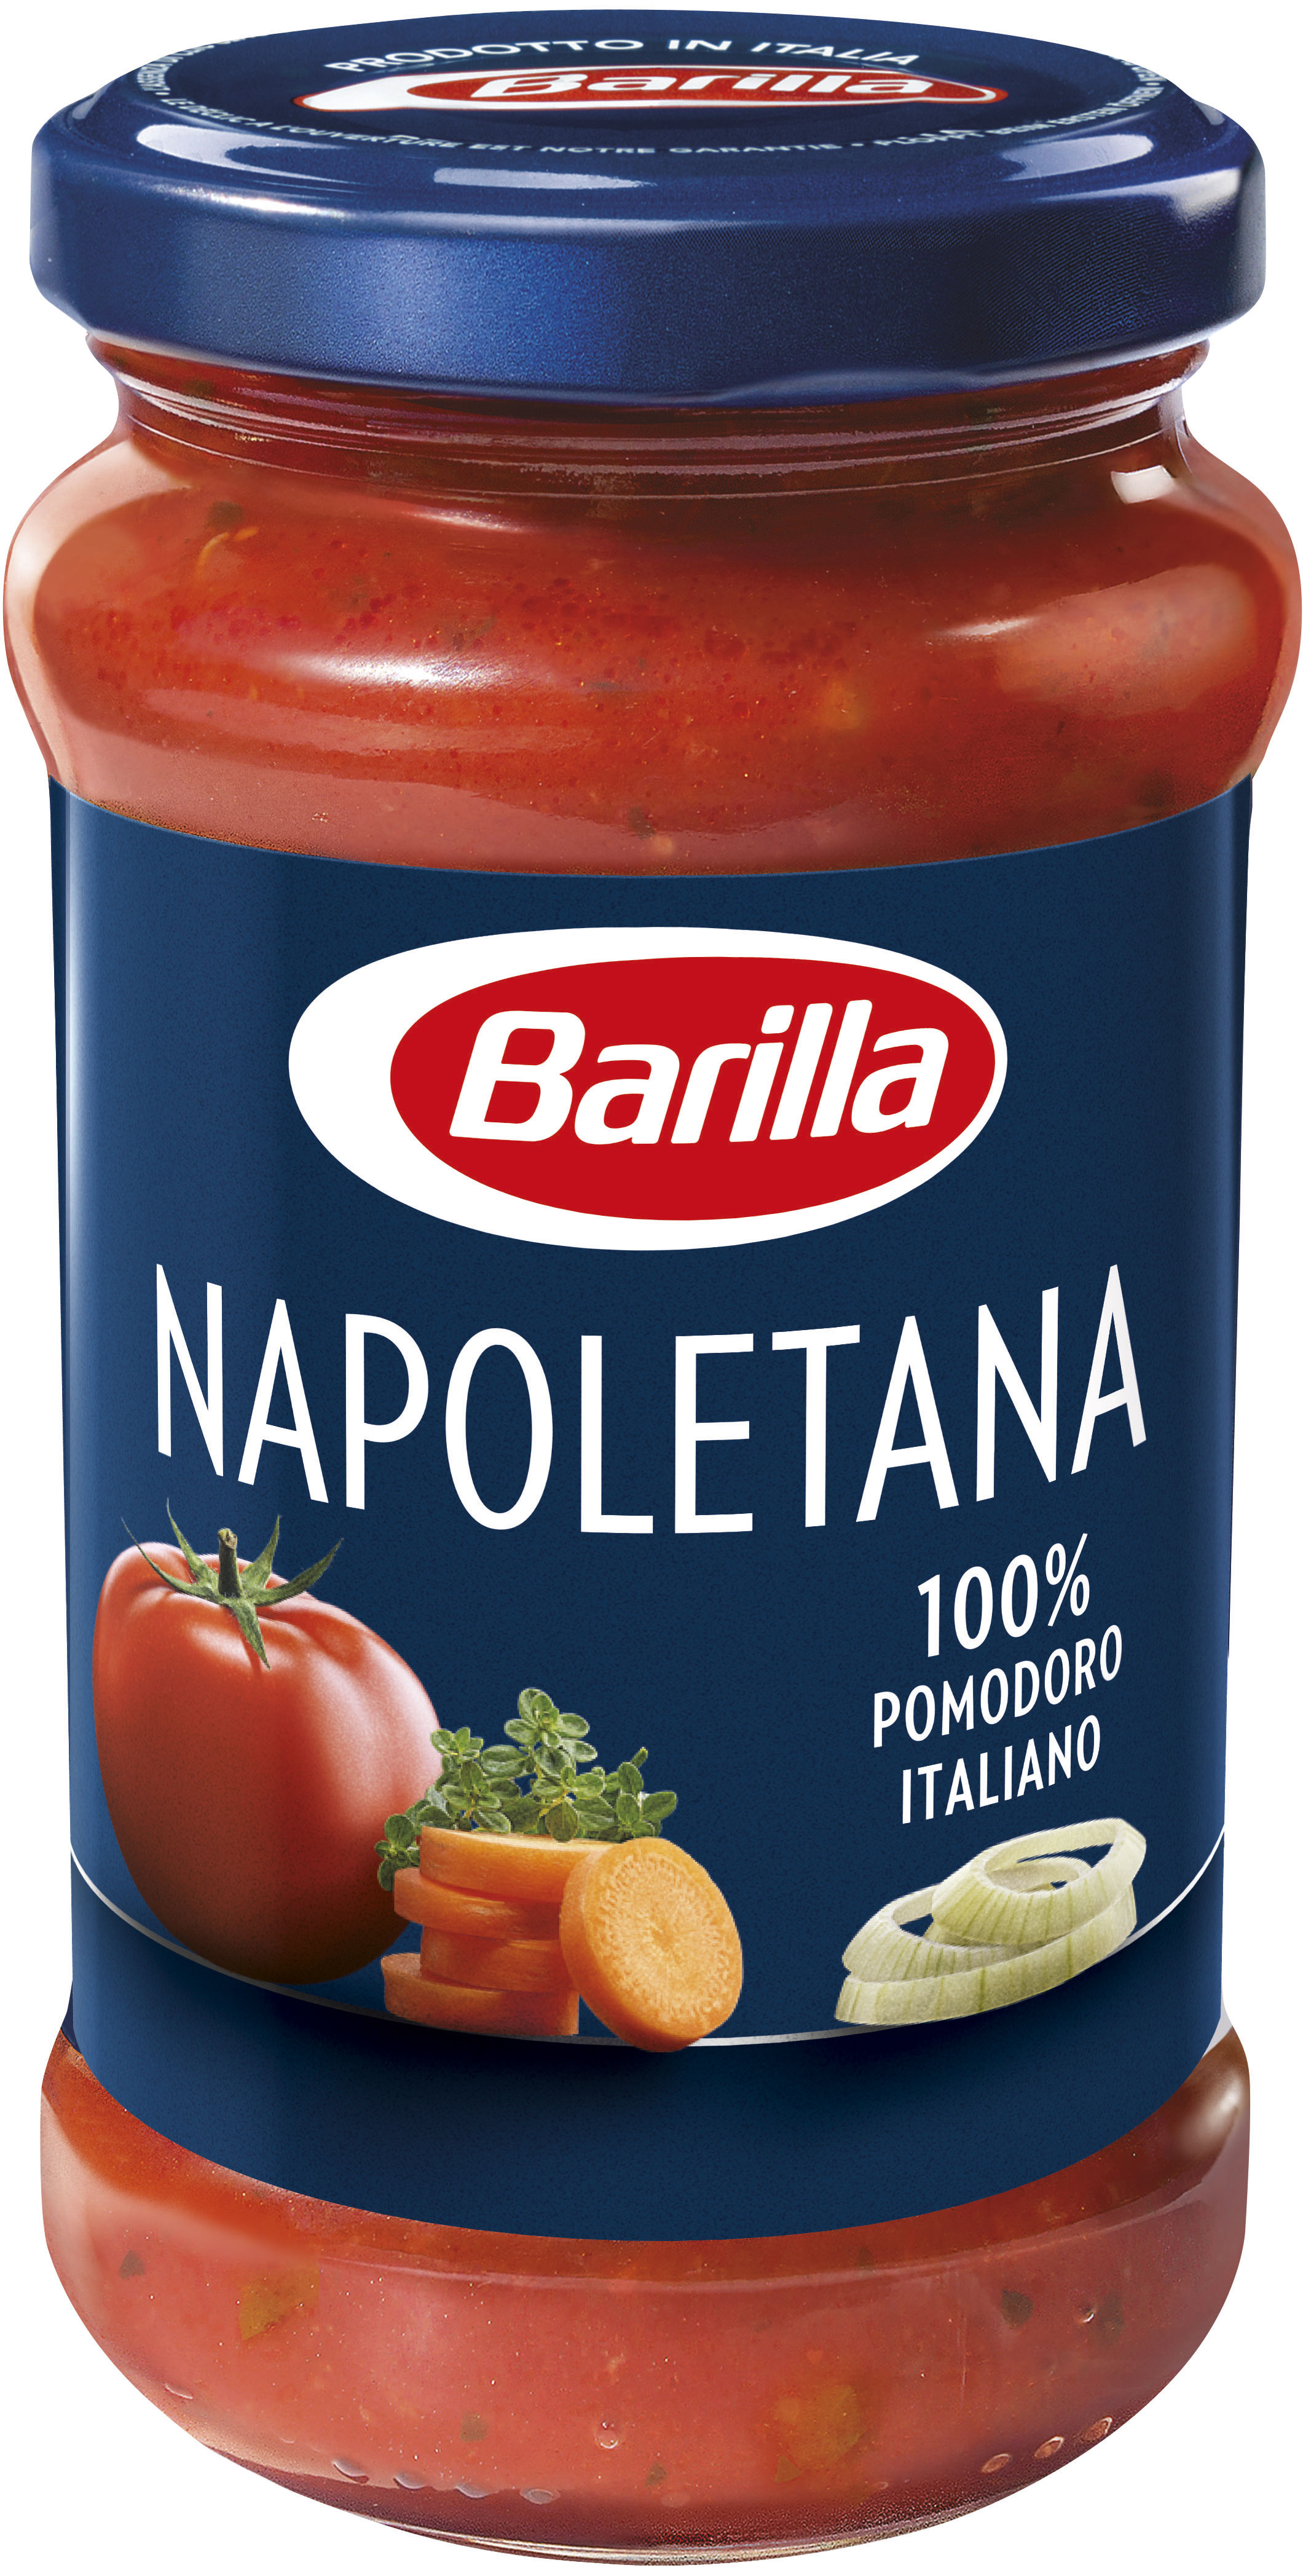 Barilla Sauce Napoletana 400g